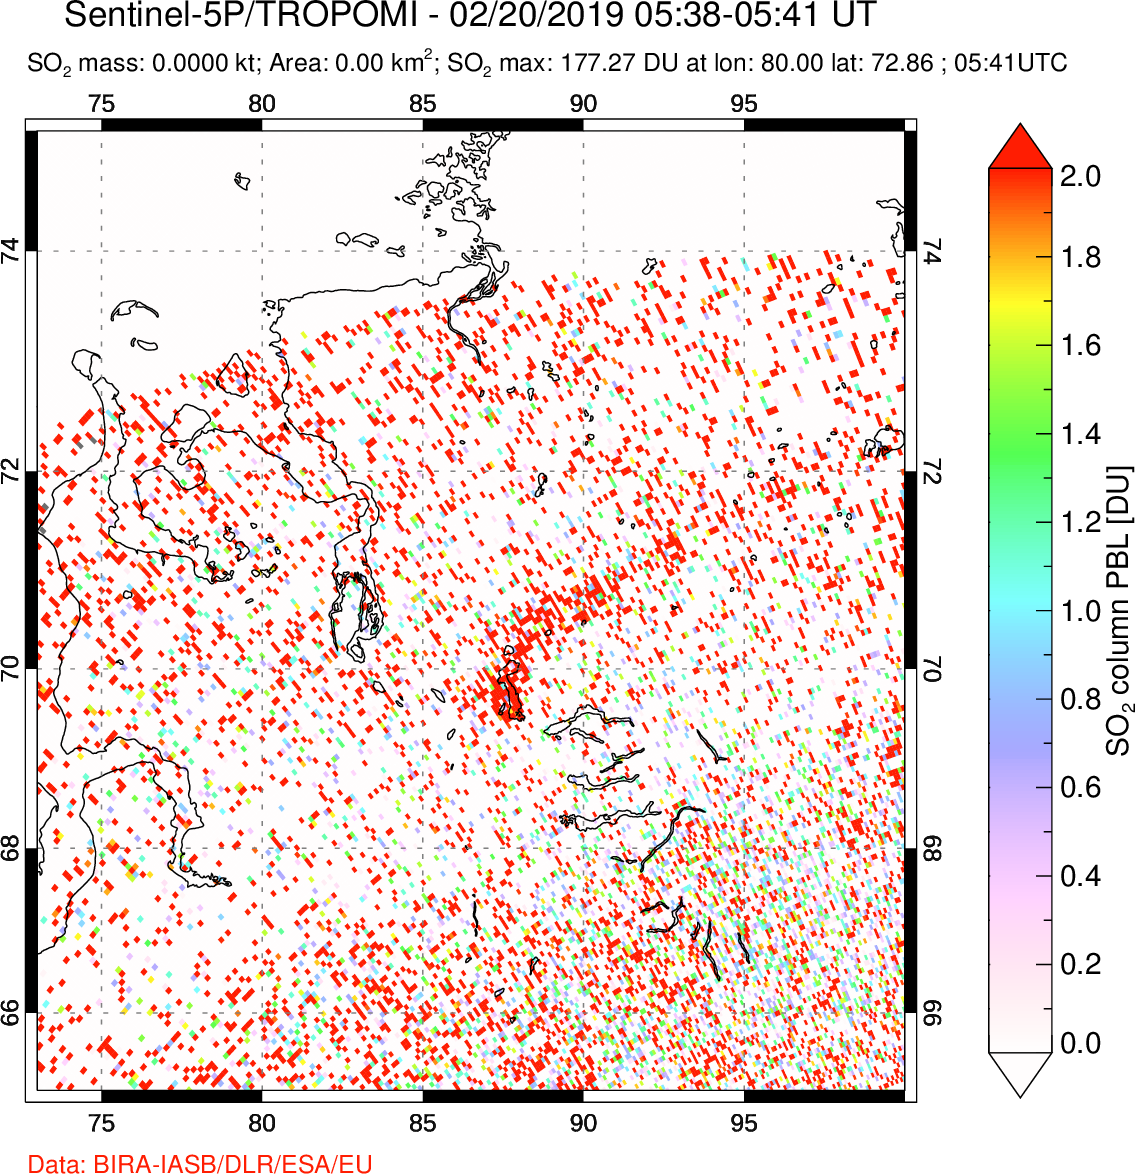 A sulfur dioxide image over Norilsk, Russian Federation on Feb 20, 2019.